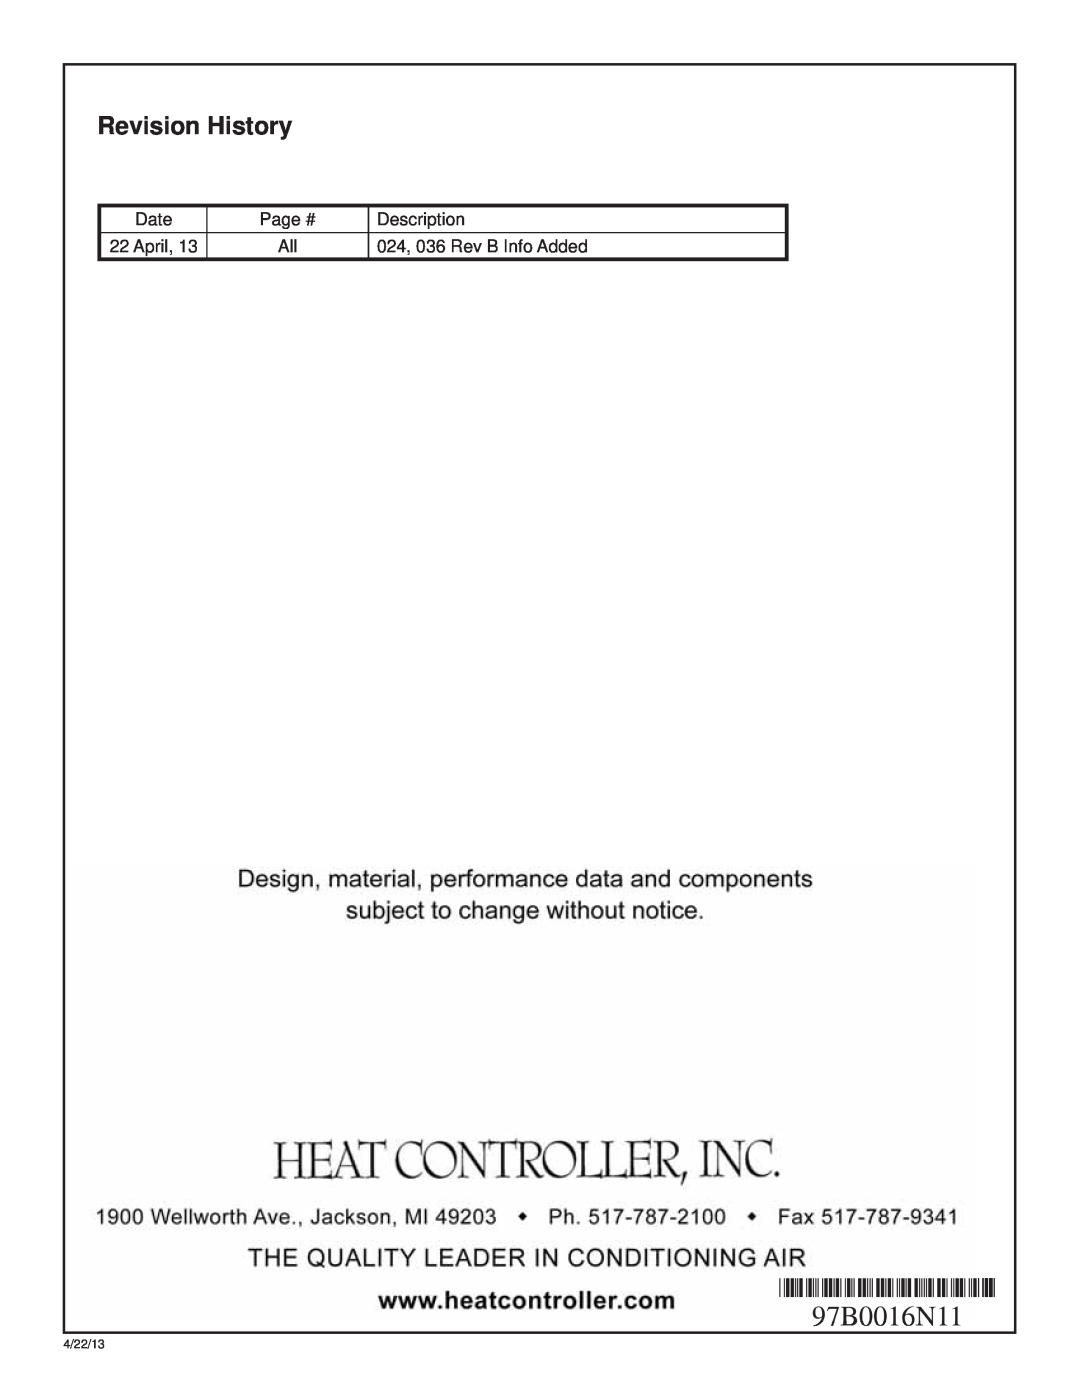 Heat Controller HEV/H manual 97B0016N11, Revision History 